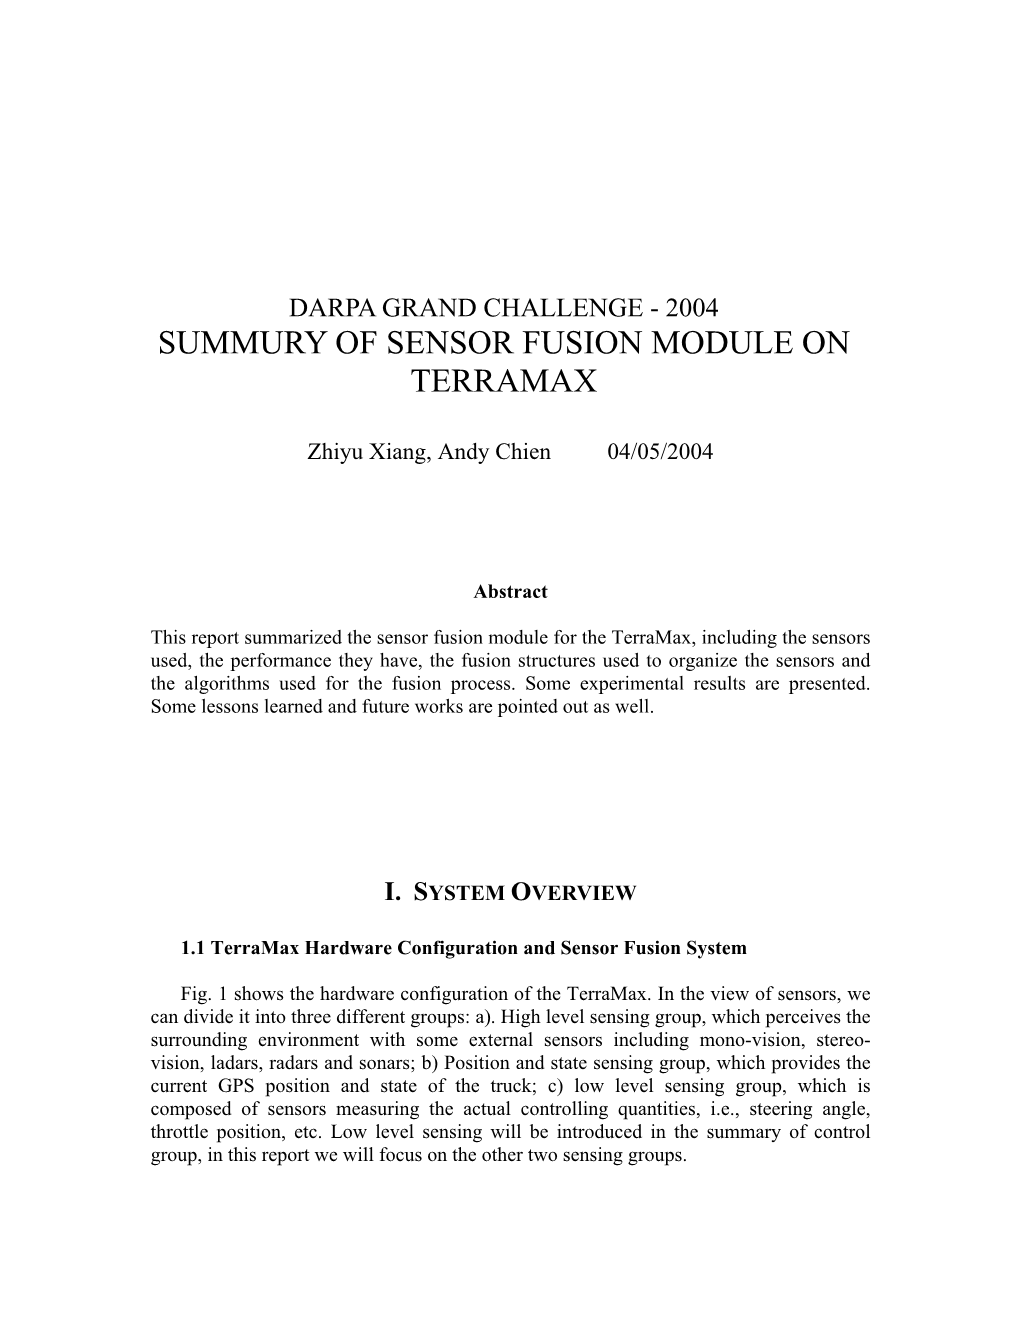 Summury of Sensor Fusion Module on Terramax